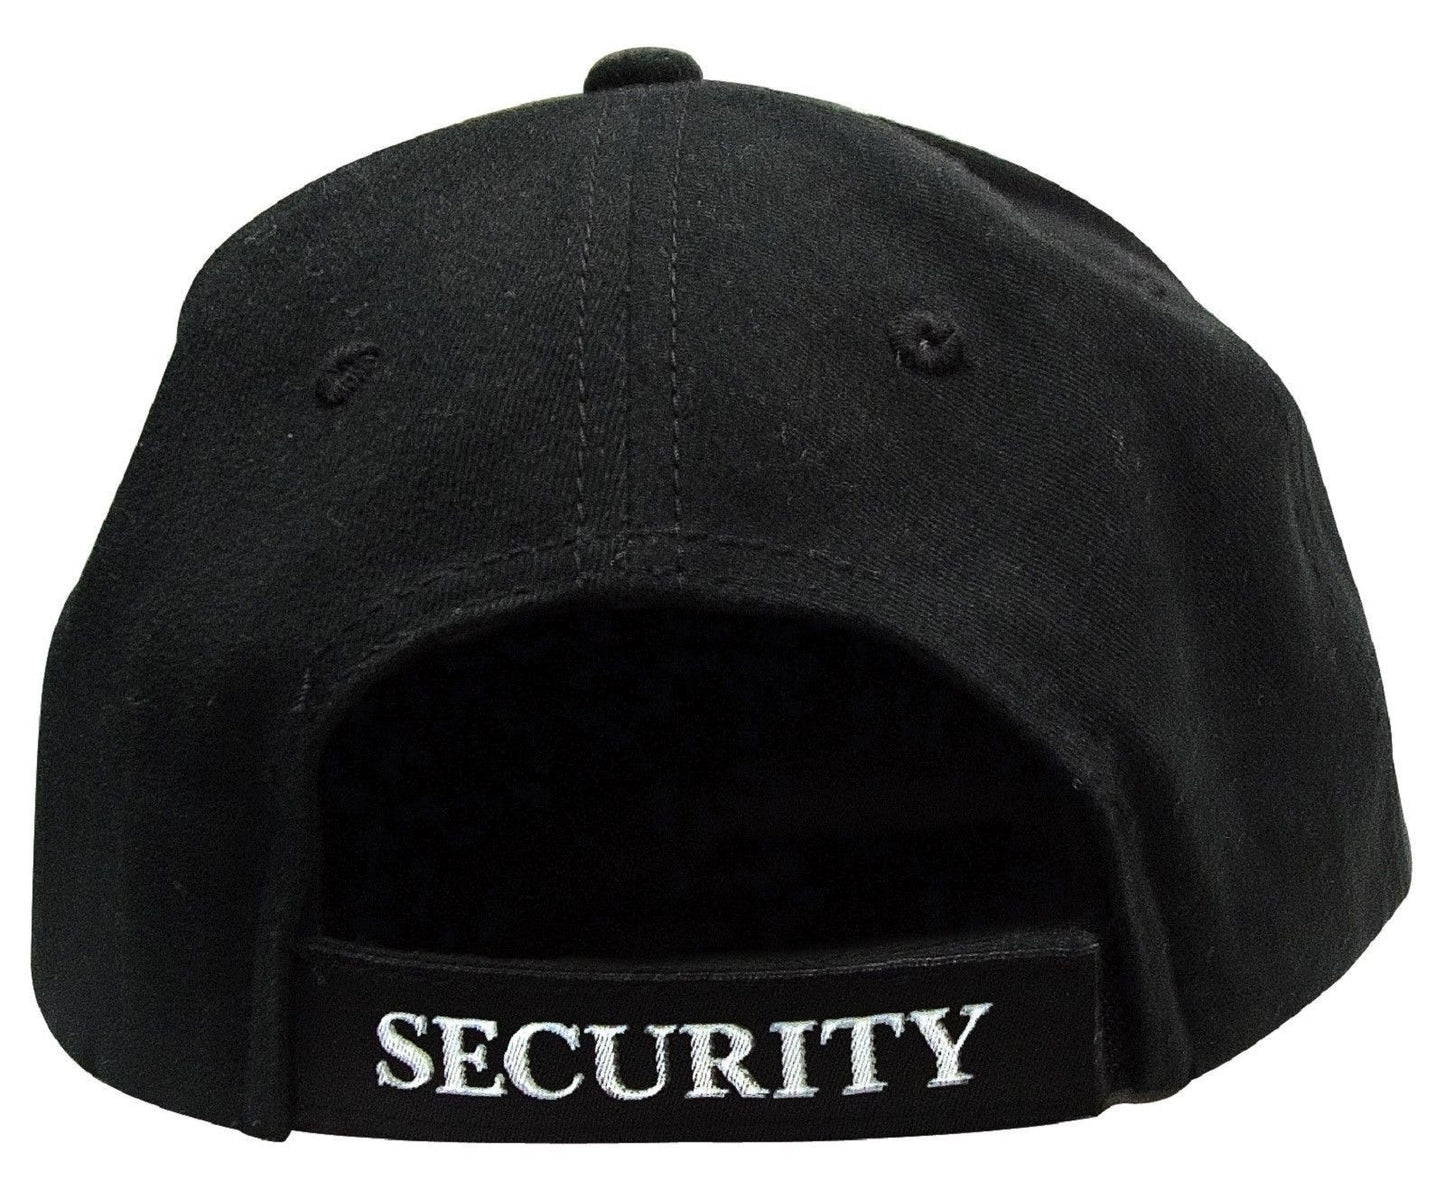 Black "Security" Hat - Deluxe Low Profile Baseball Cap